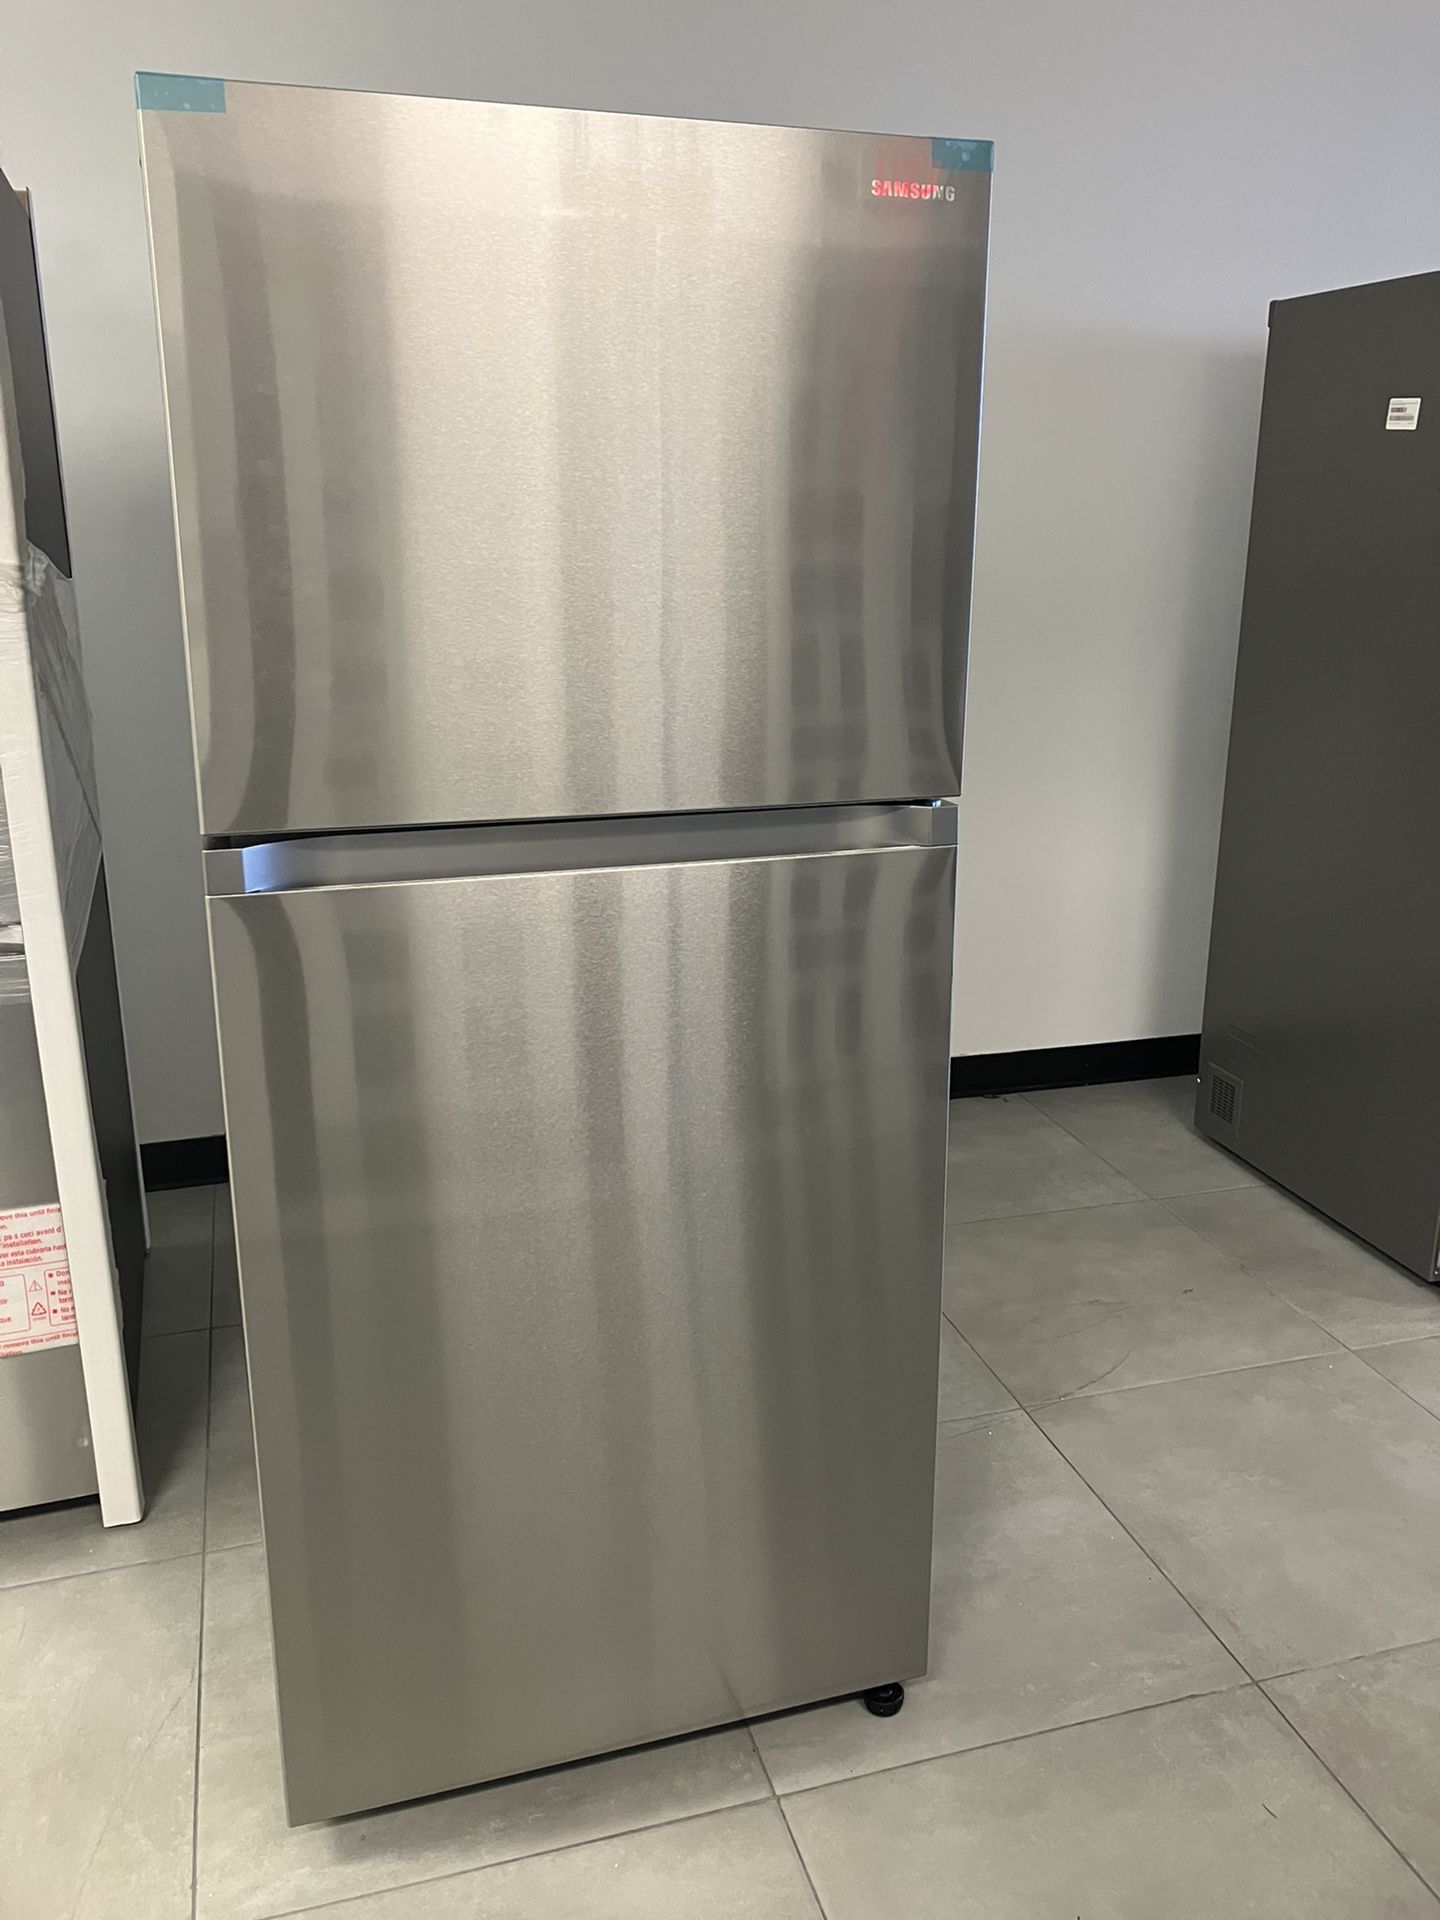 $599 New Samsung Refrigerator